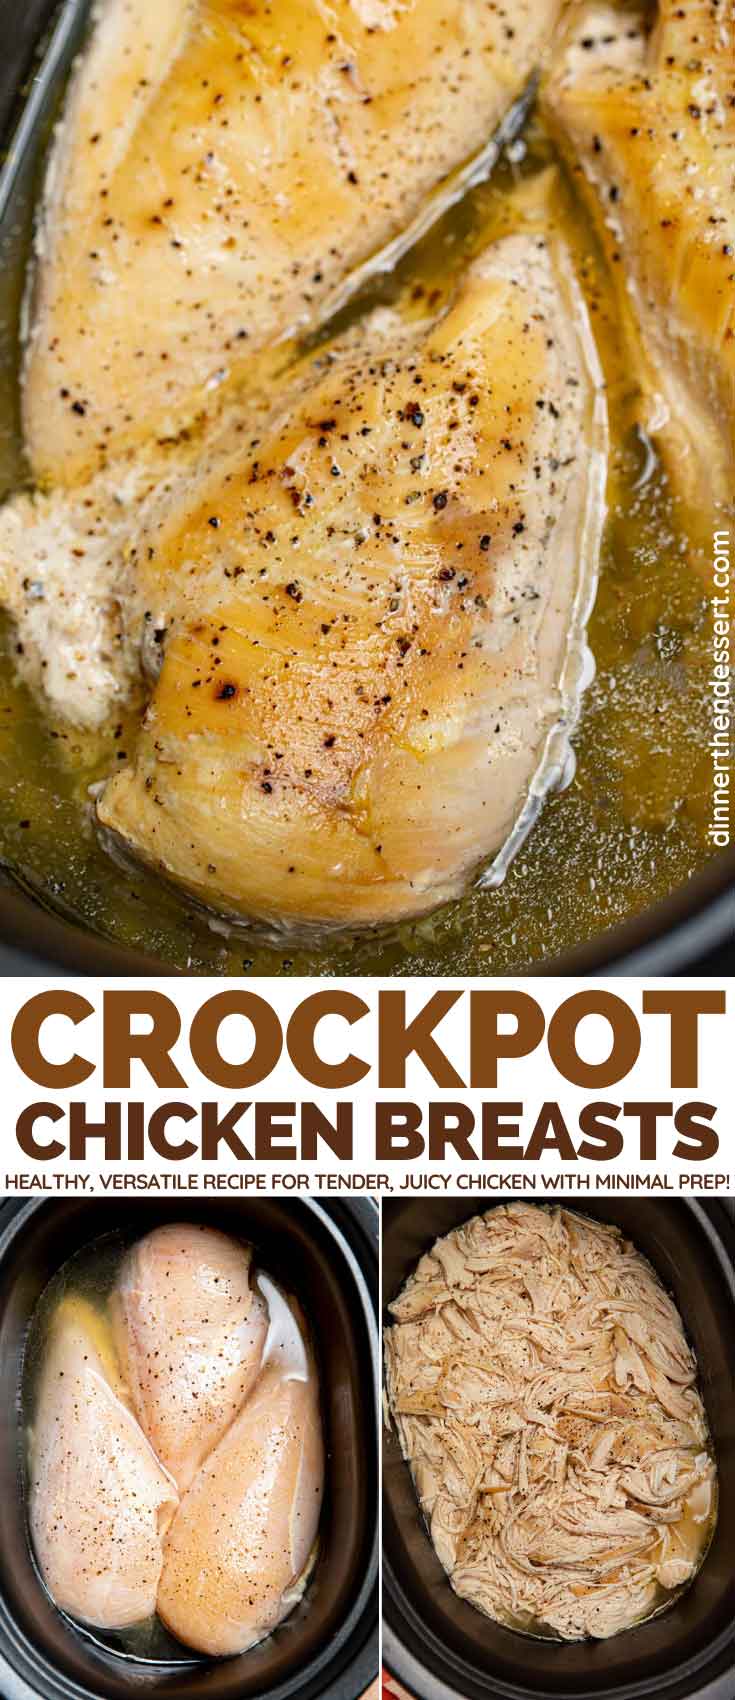 https://dinnerthendessert.com/wp-content/uploads/2020/02/Slow-Cooker-Chicken-Breasts-L.jpg